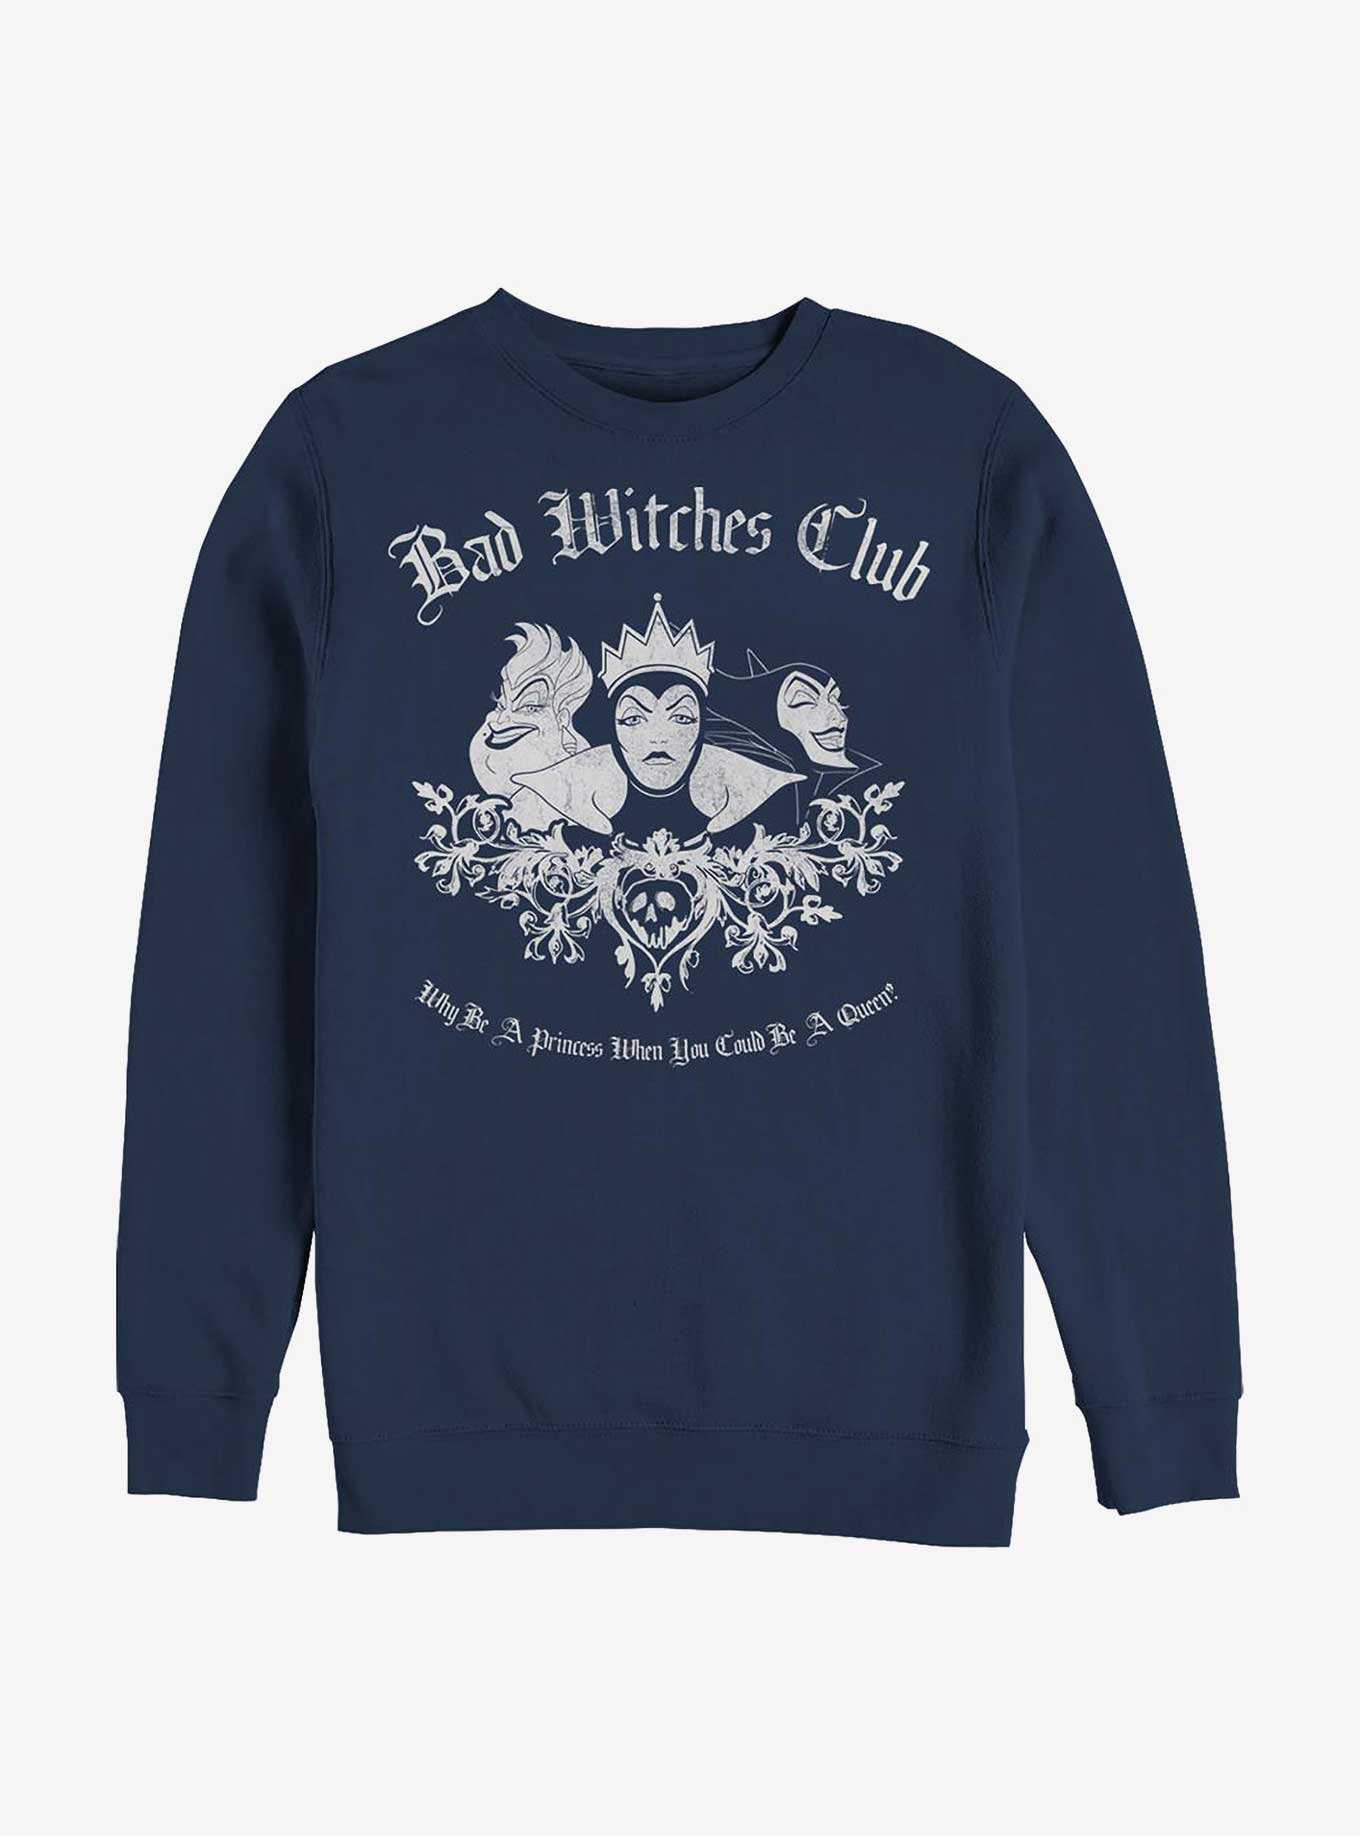 Disney Villains Bad Witches Club Sweatshirt, , hi-res